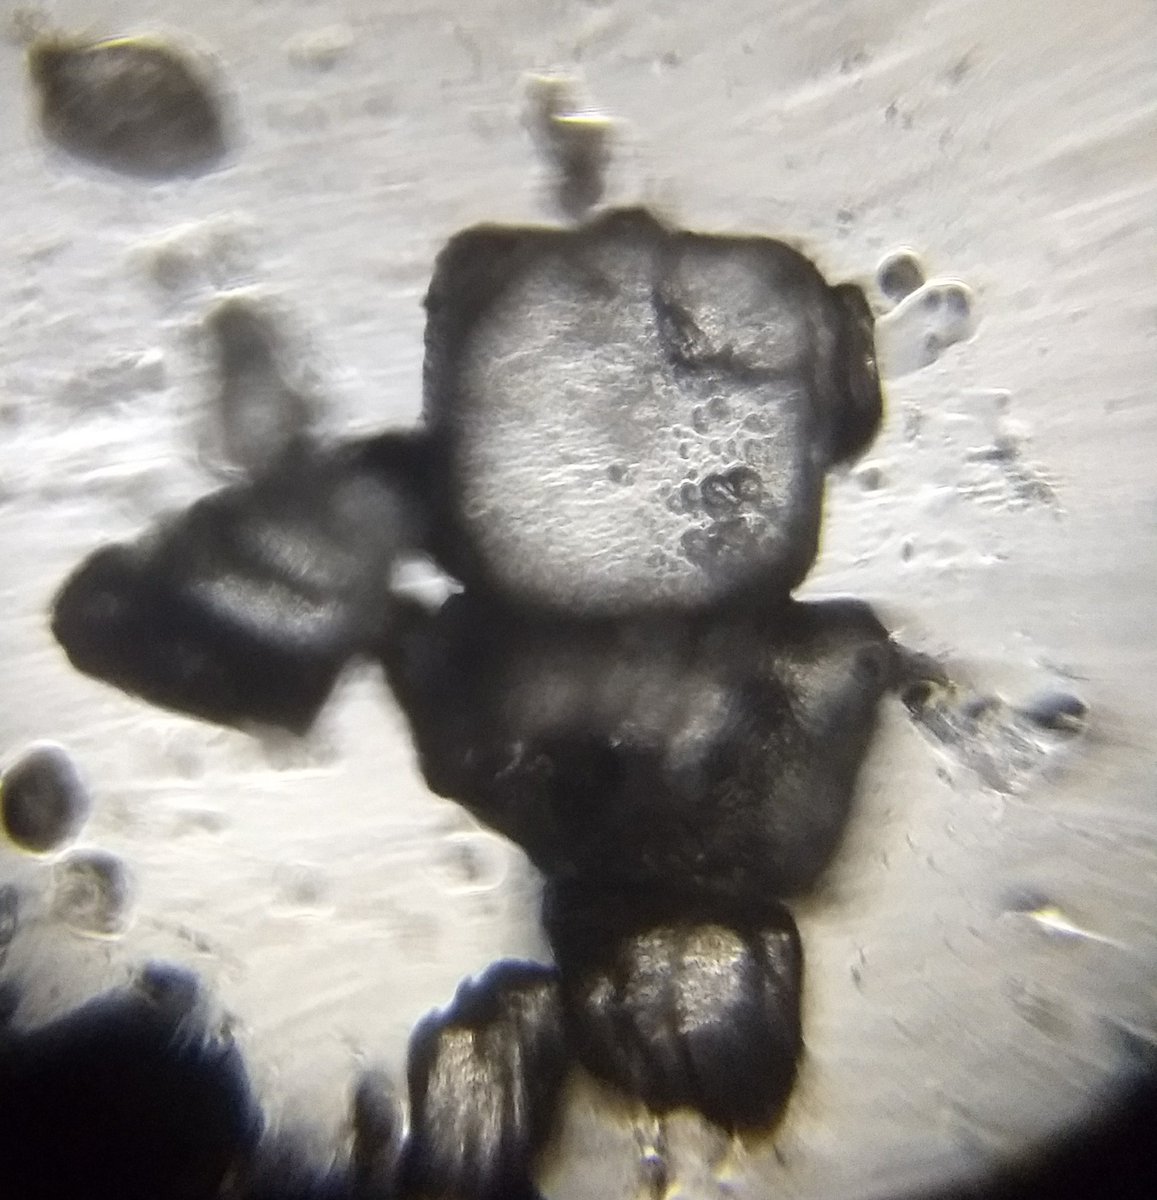  image of Table salt when seen from a foldscope 